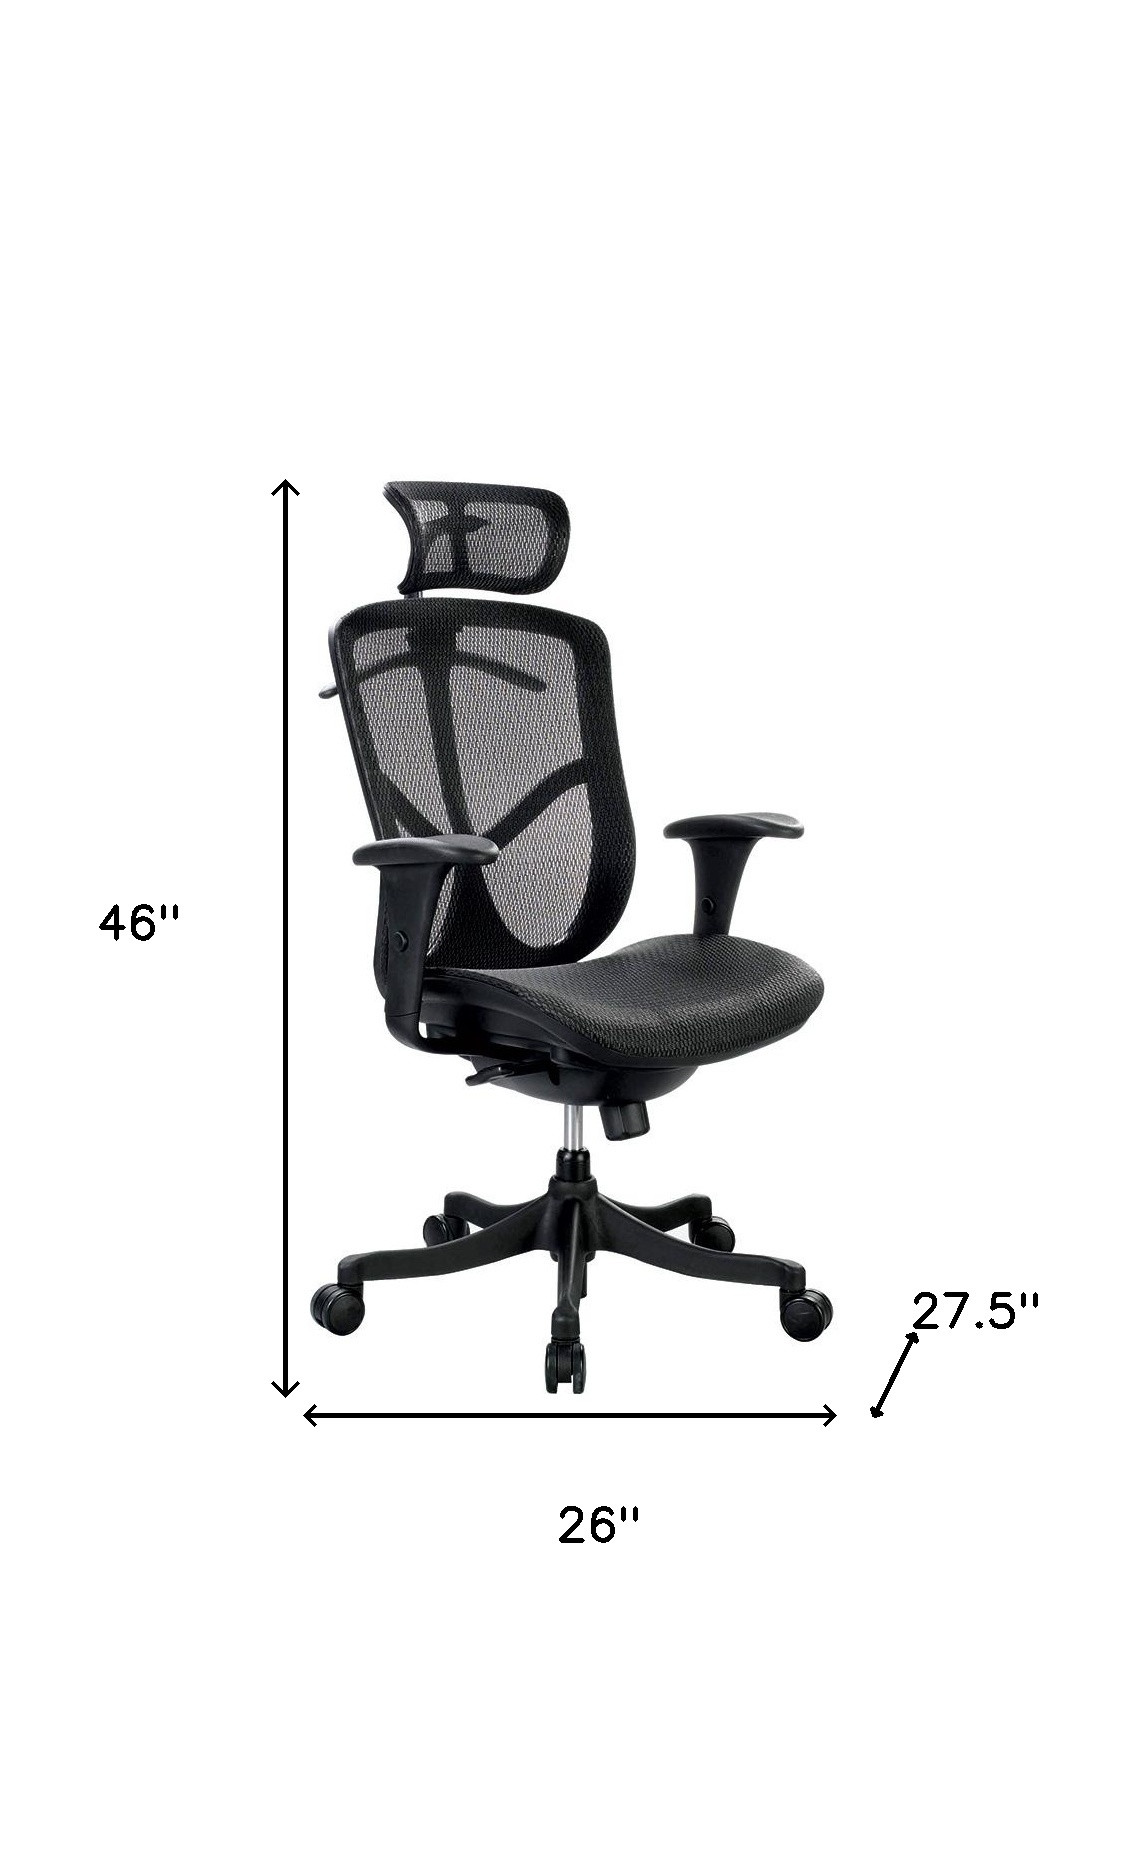 26" x 27.5" x 46" Black Mesh High Tilt Chair